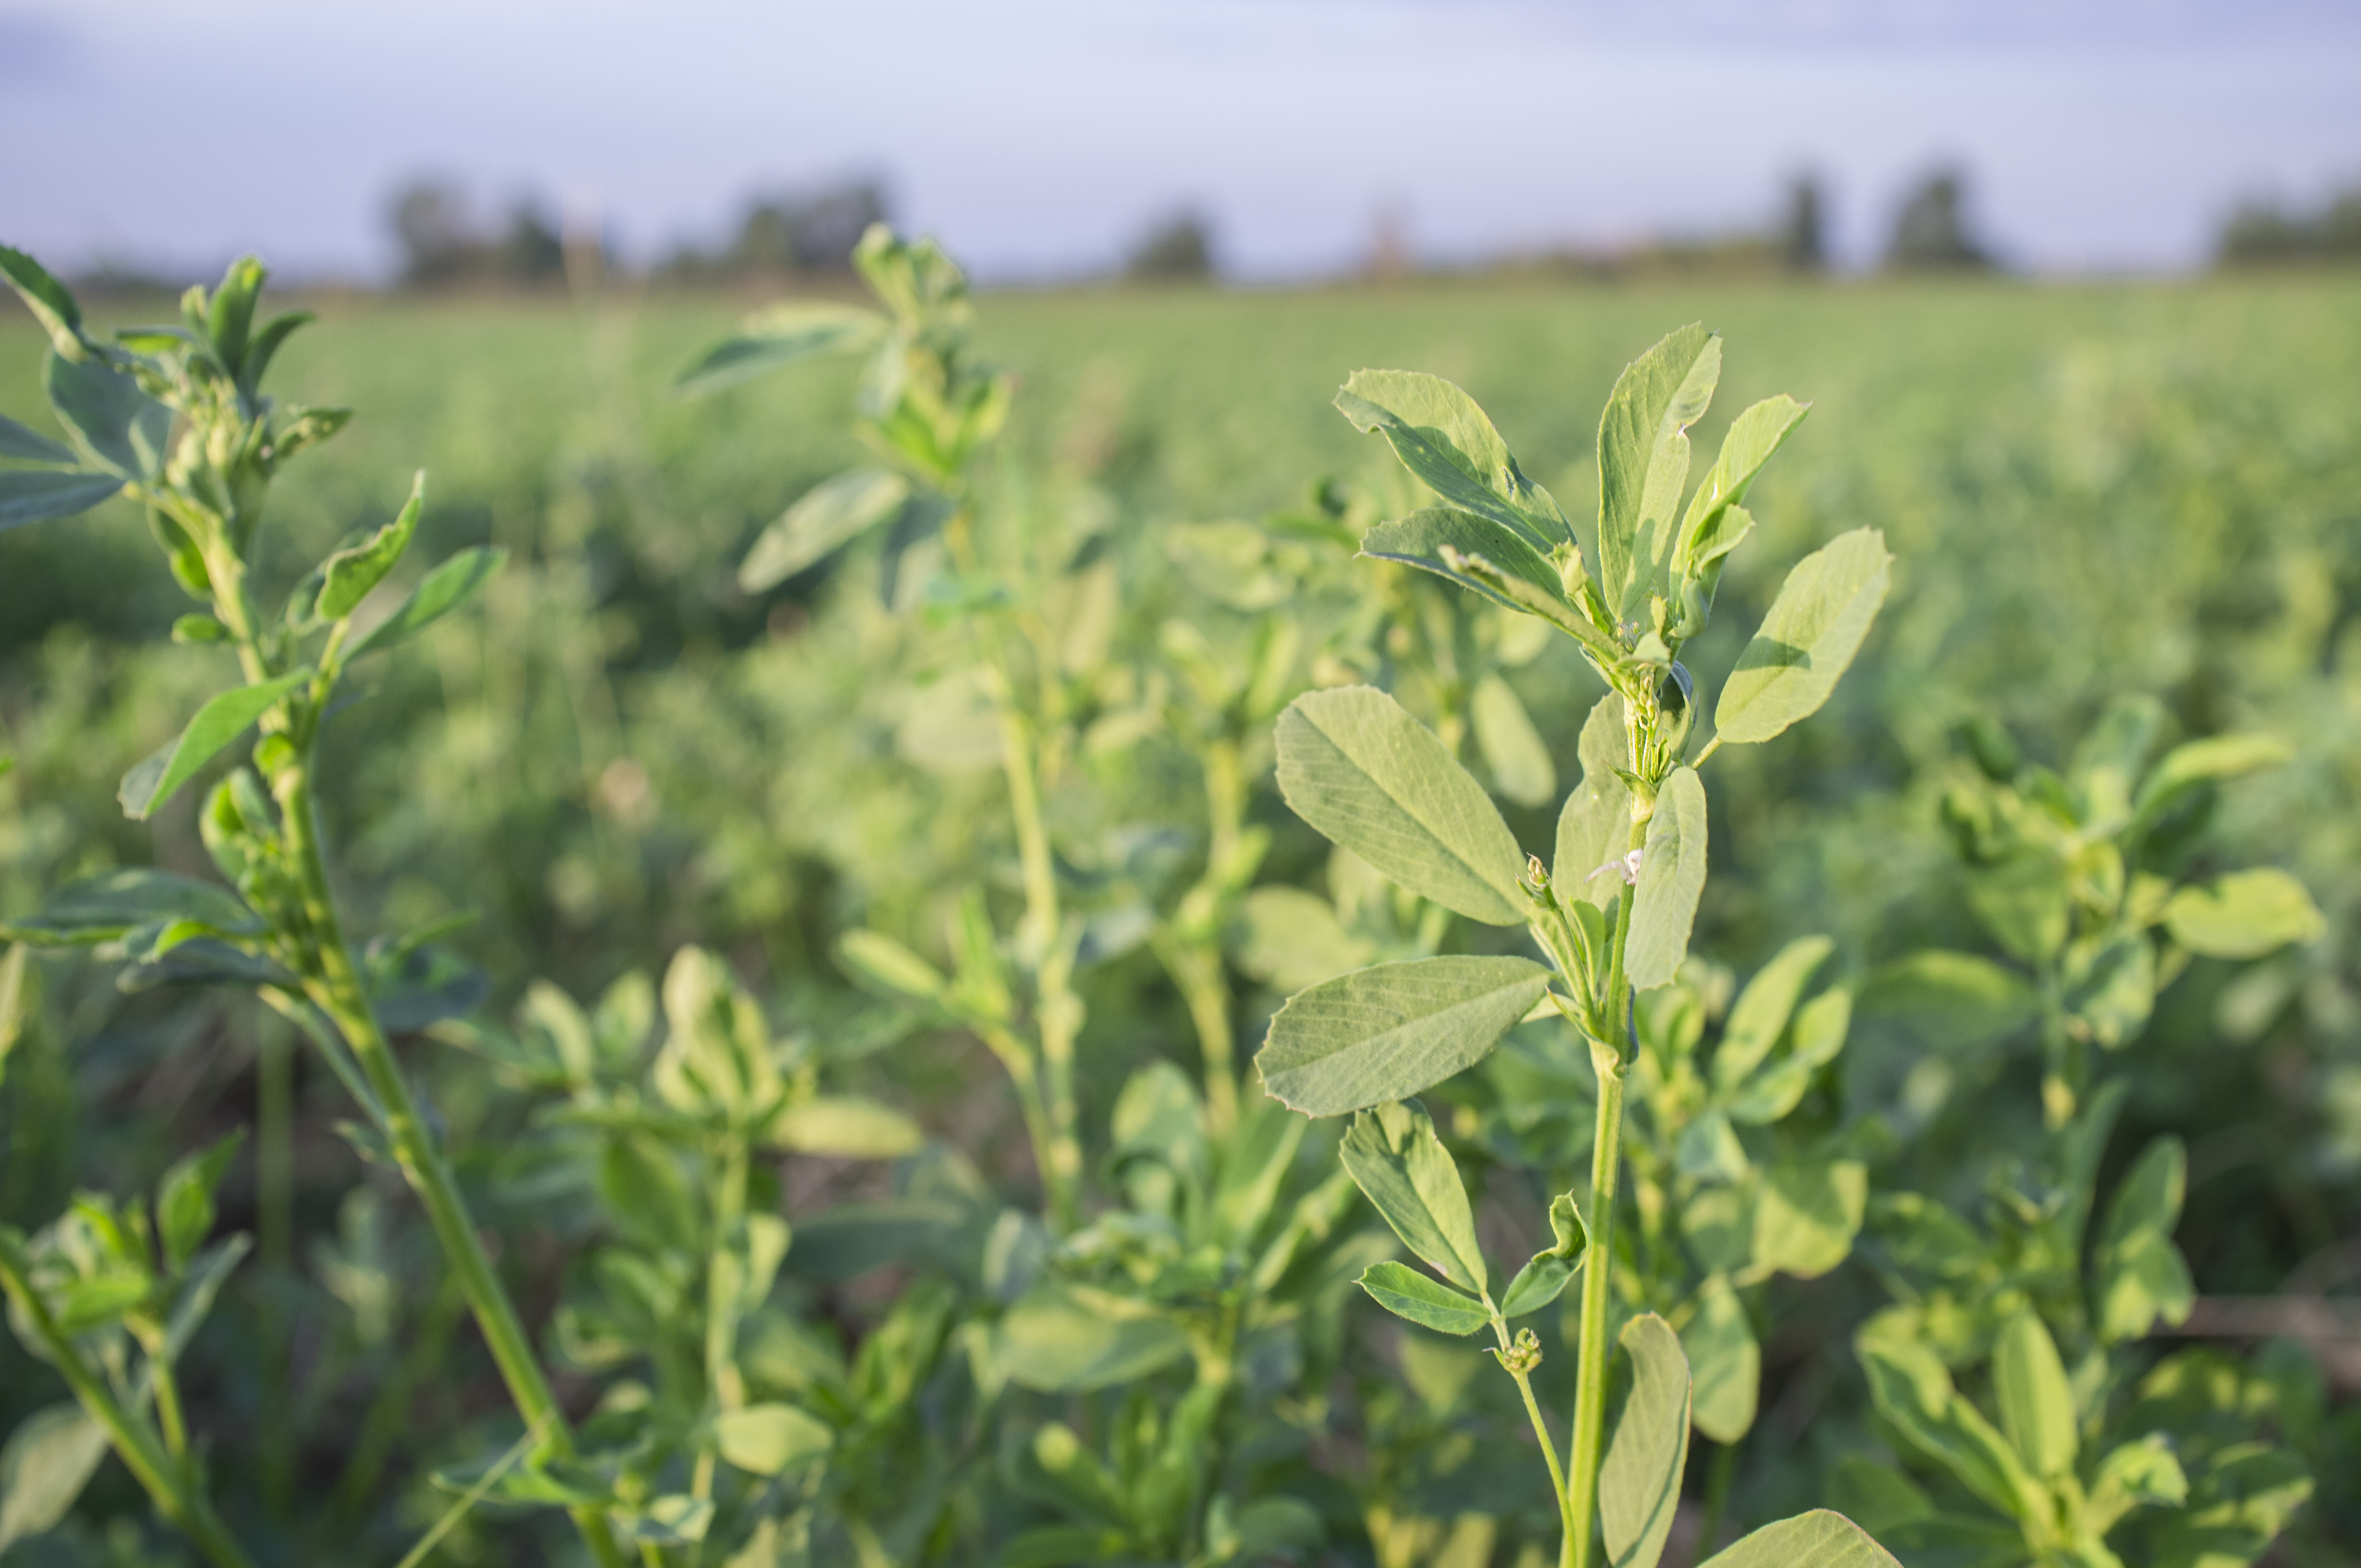 Las exportaciones de alfalfa deshidratada aumentan un 2,4% en el primer semestre de 2018